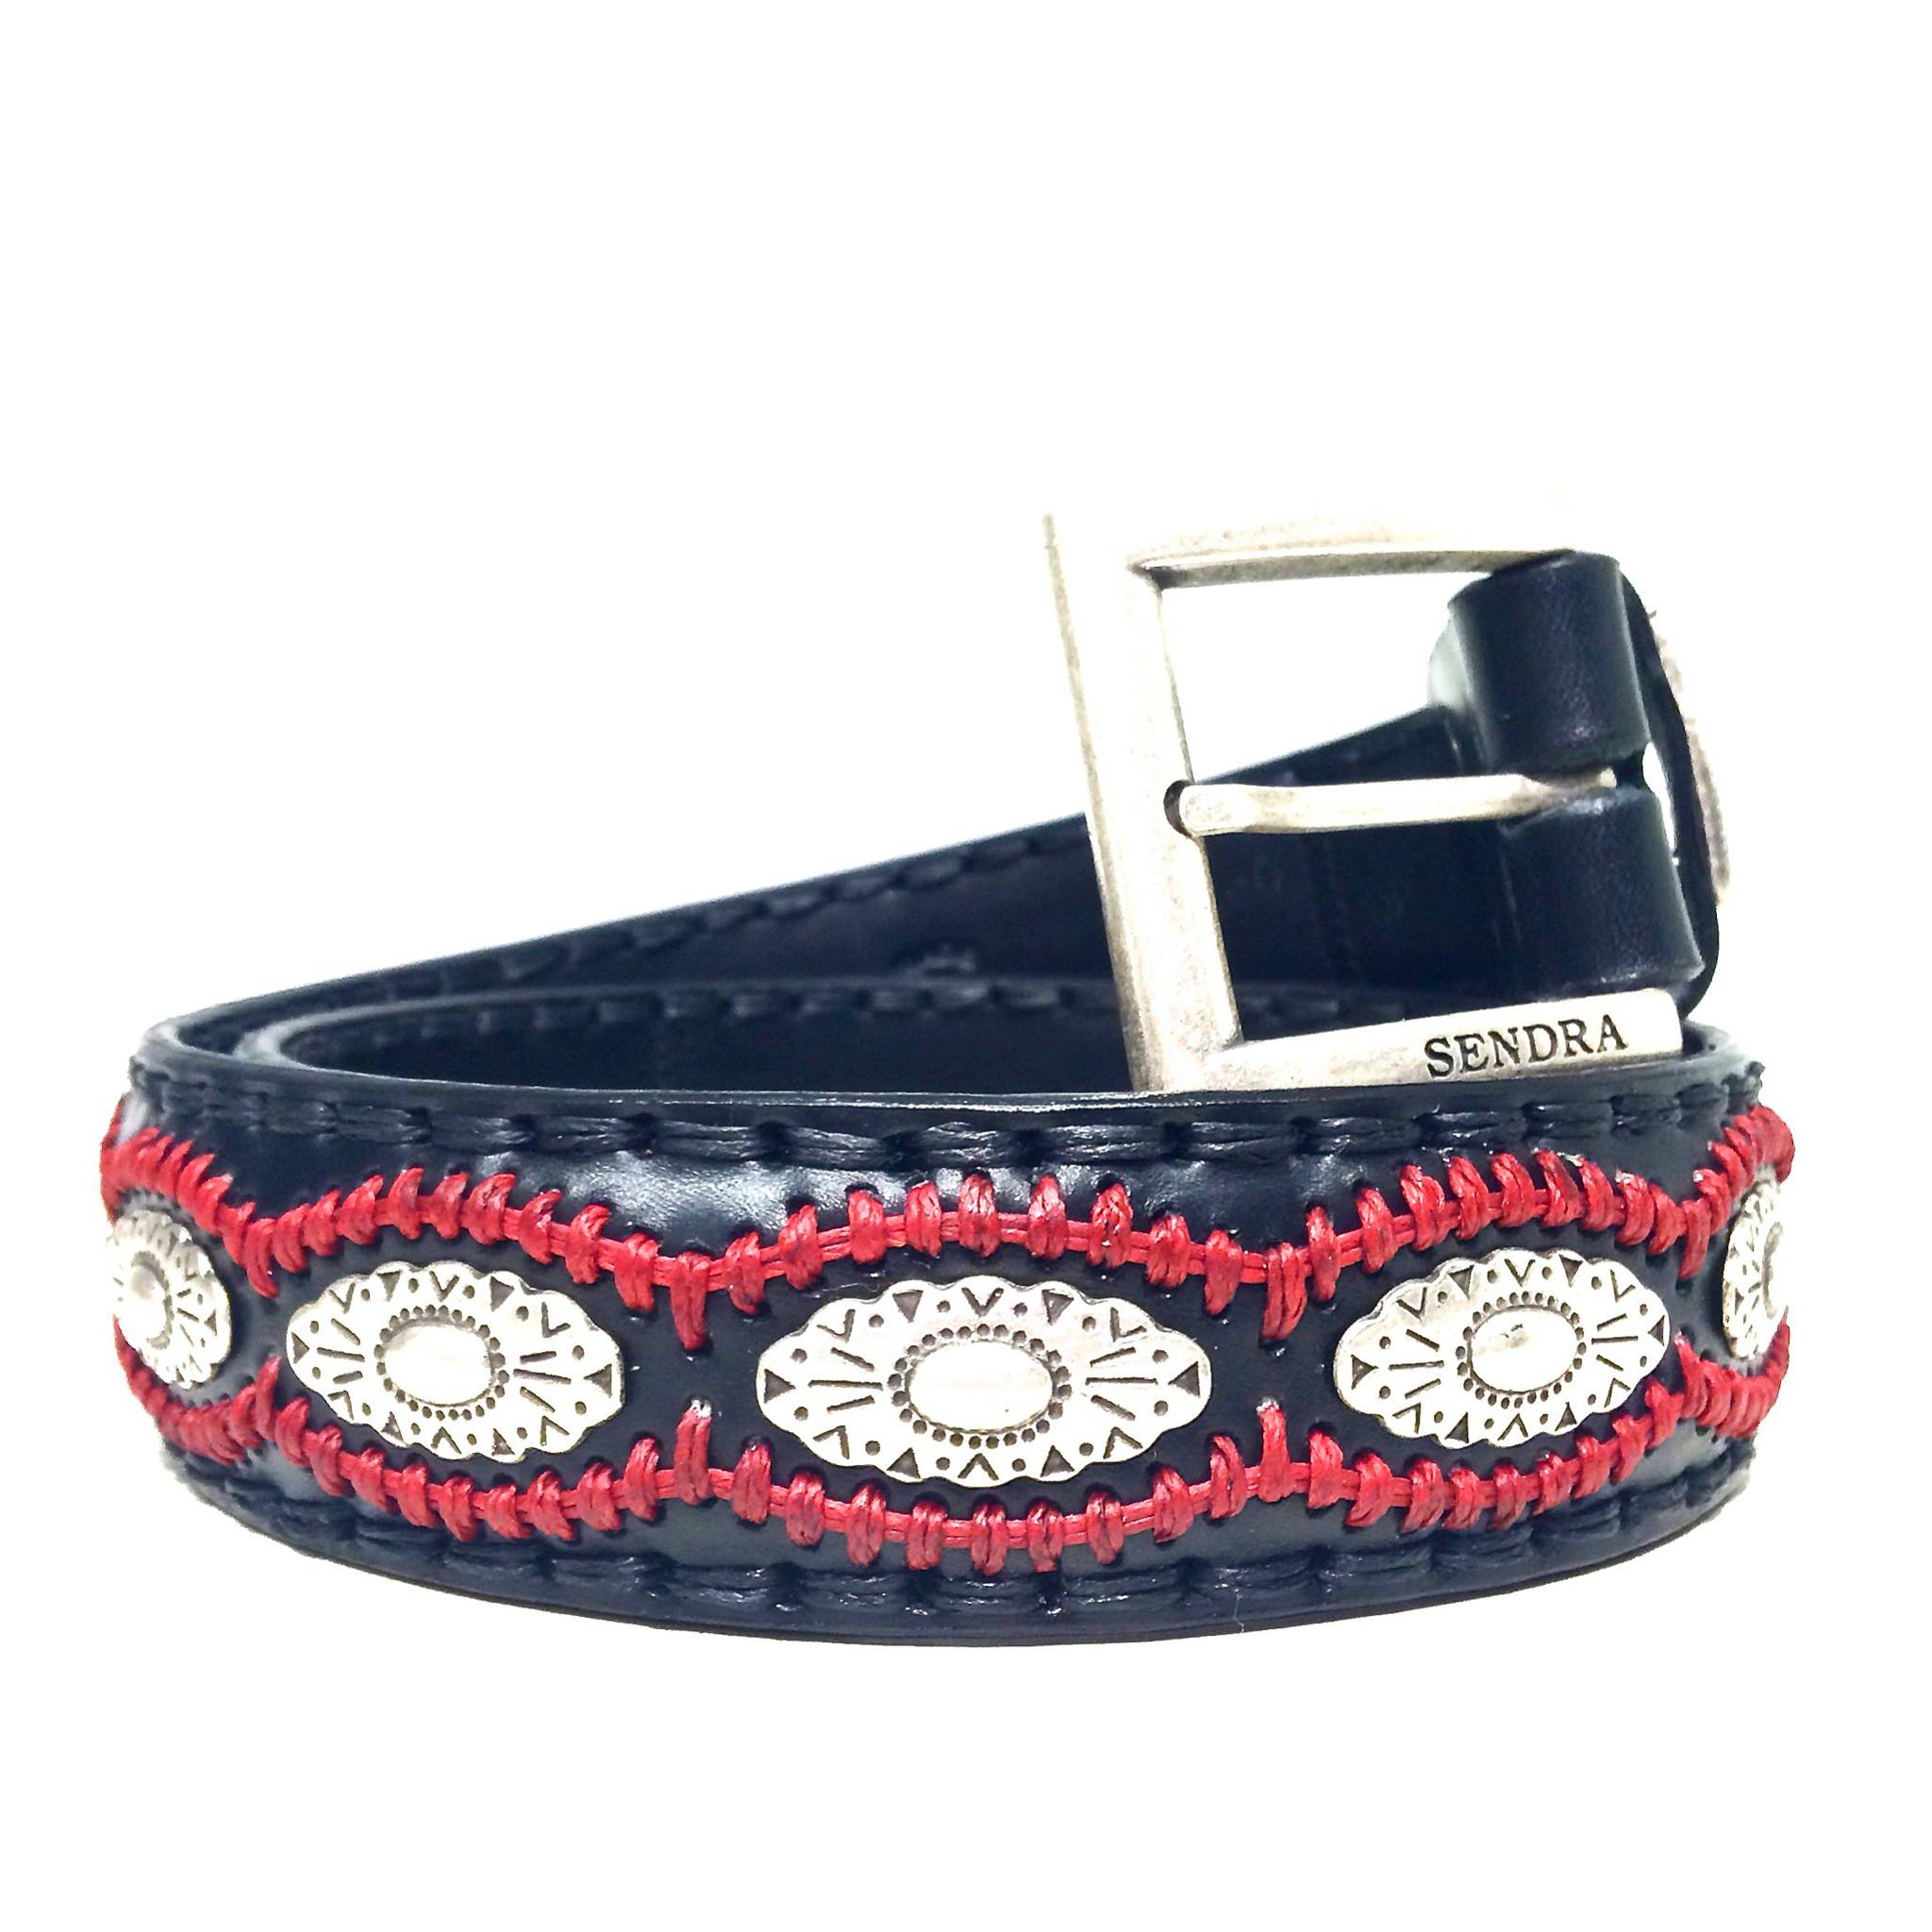 Sendra belt - 7606 black/red stitching